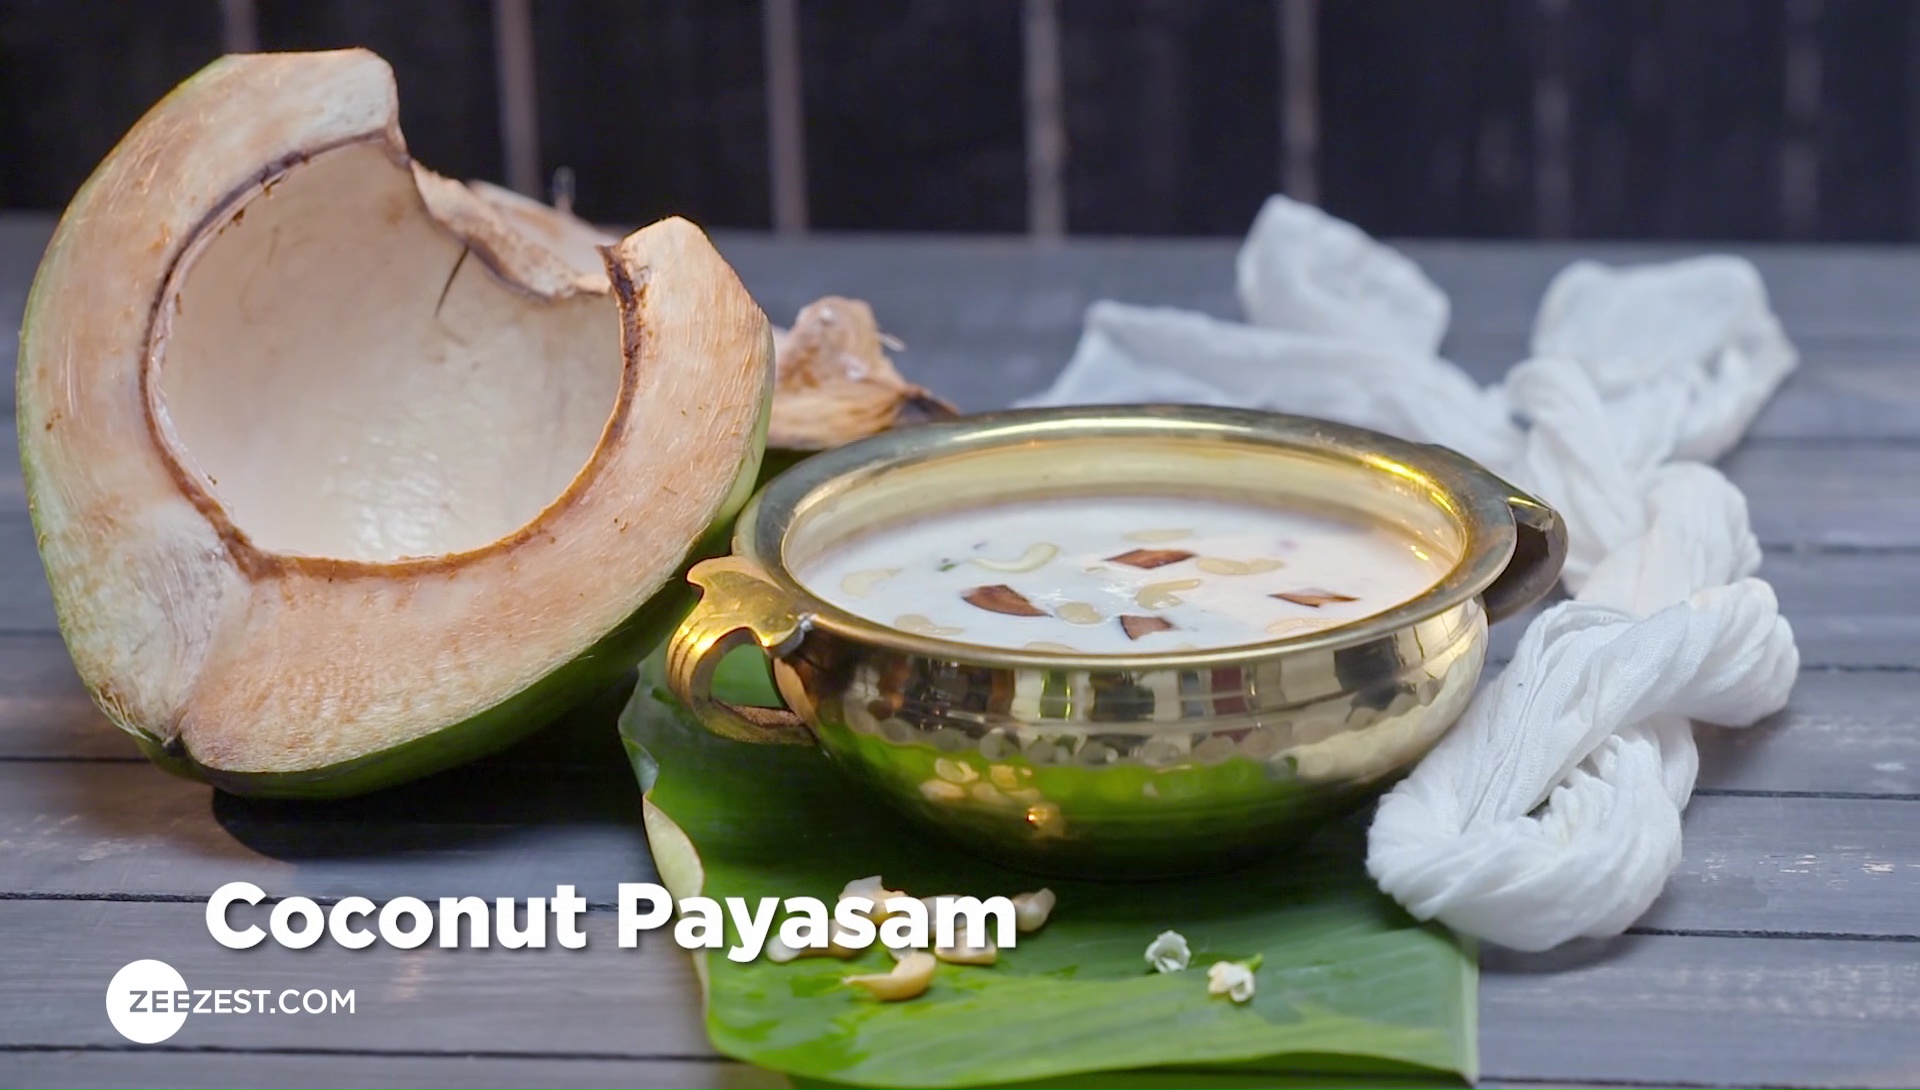 Coconut Payasam